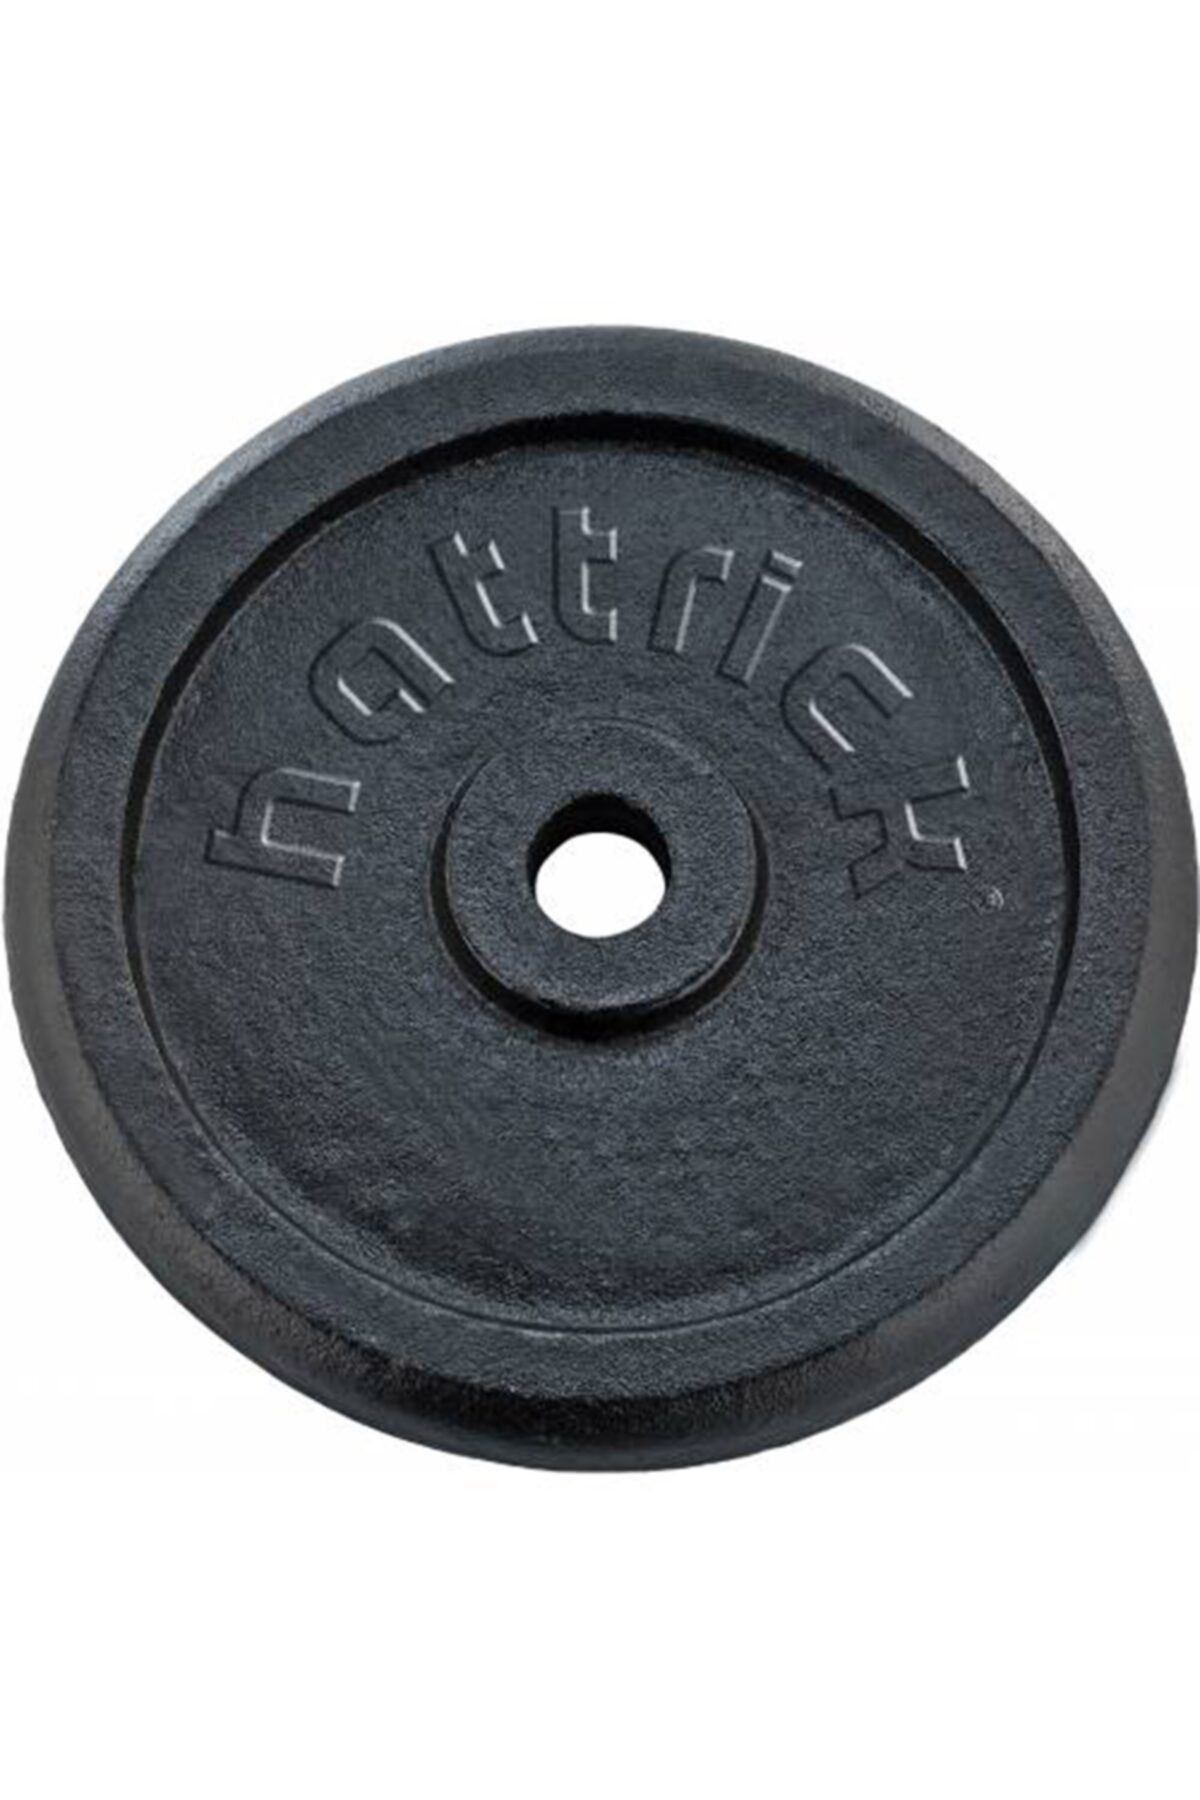 Hattrick Döküm Flanş Plaka (sdh-2) 2 kg